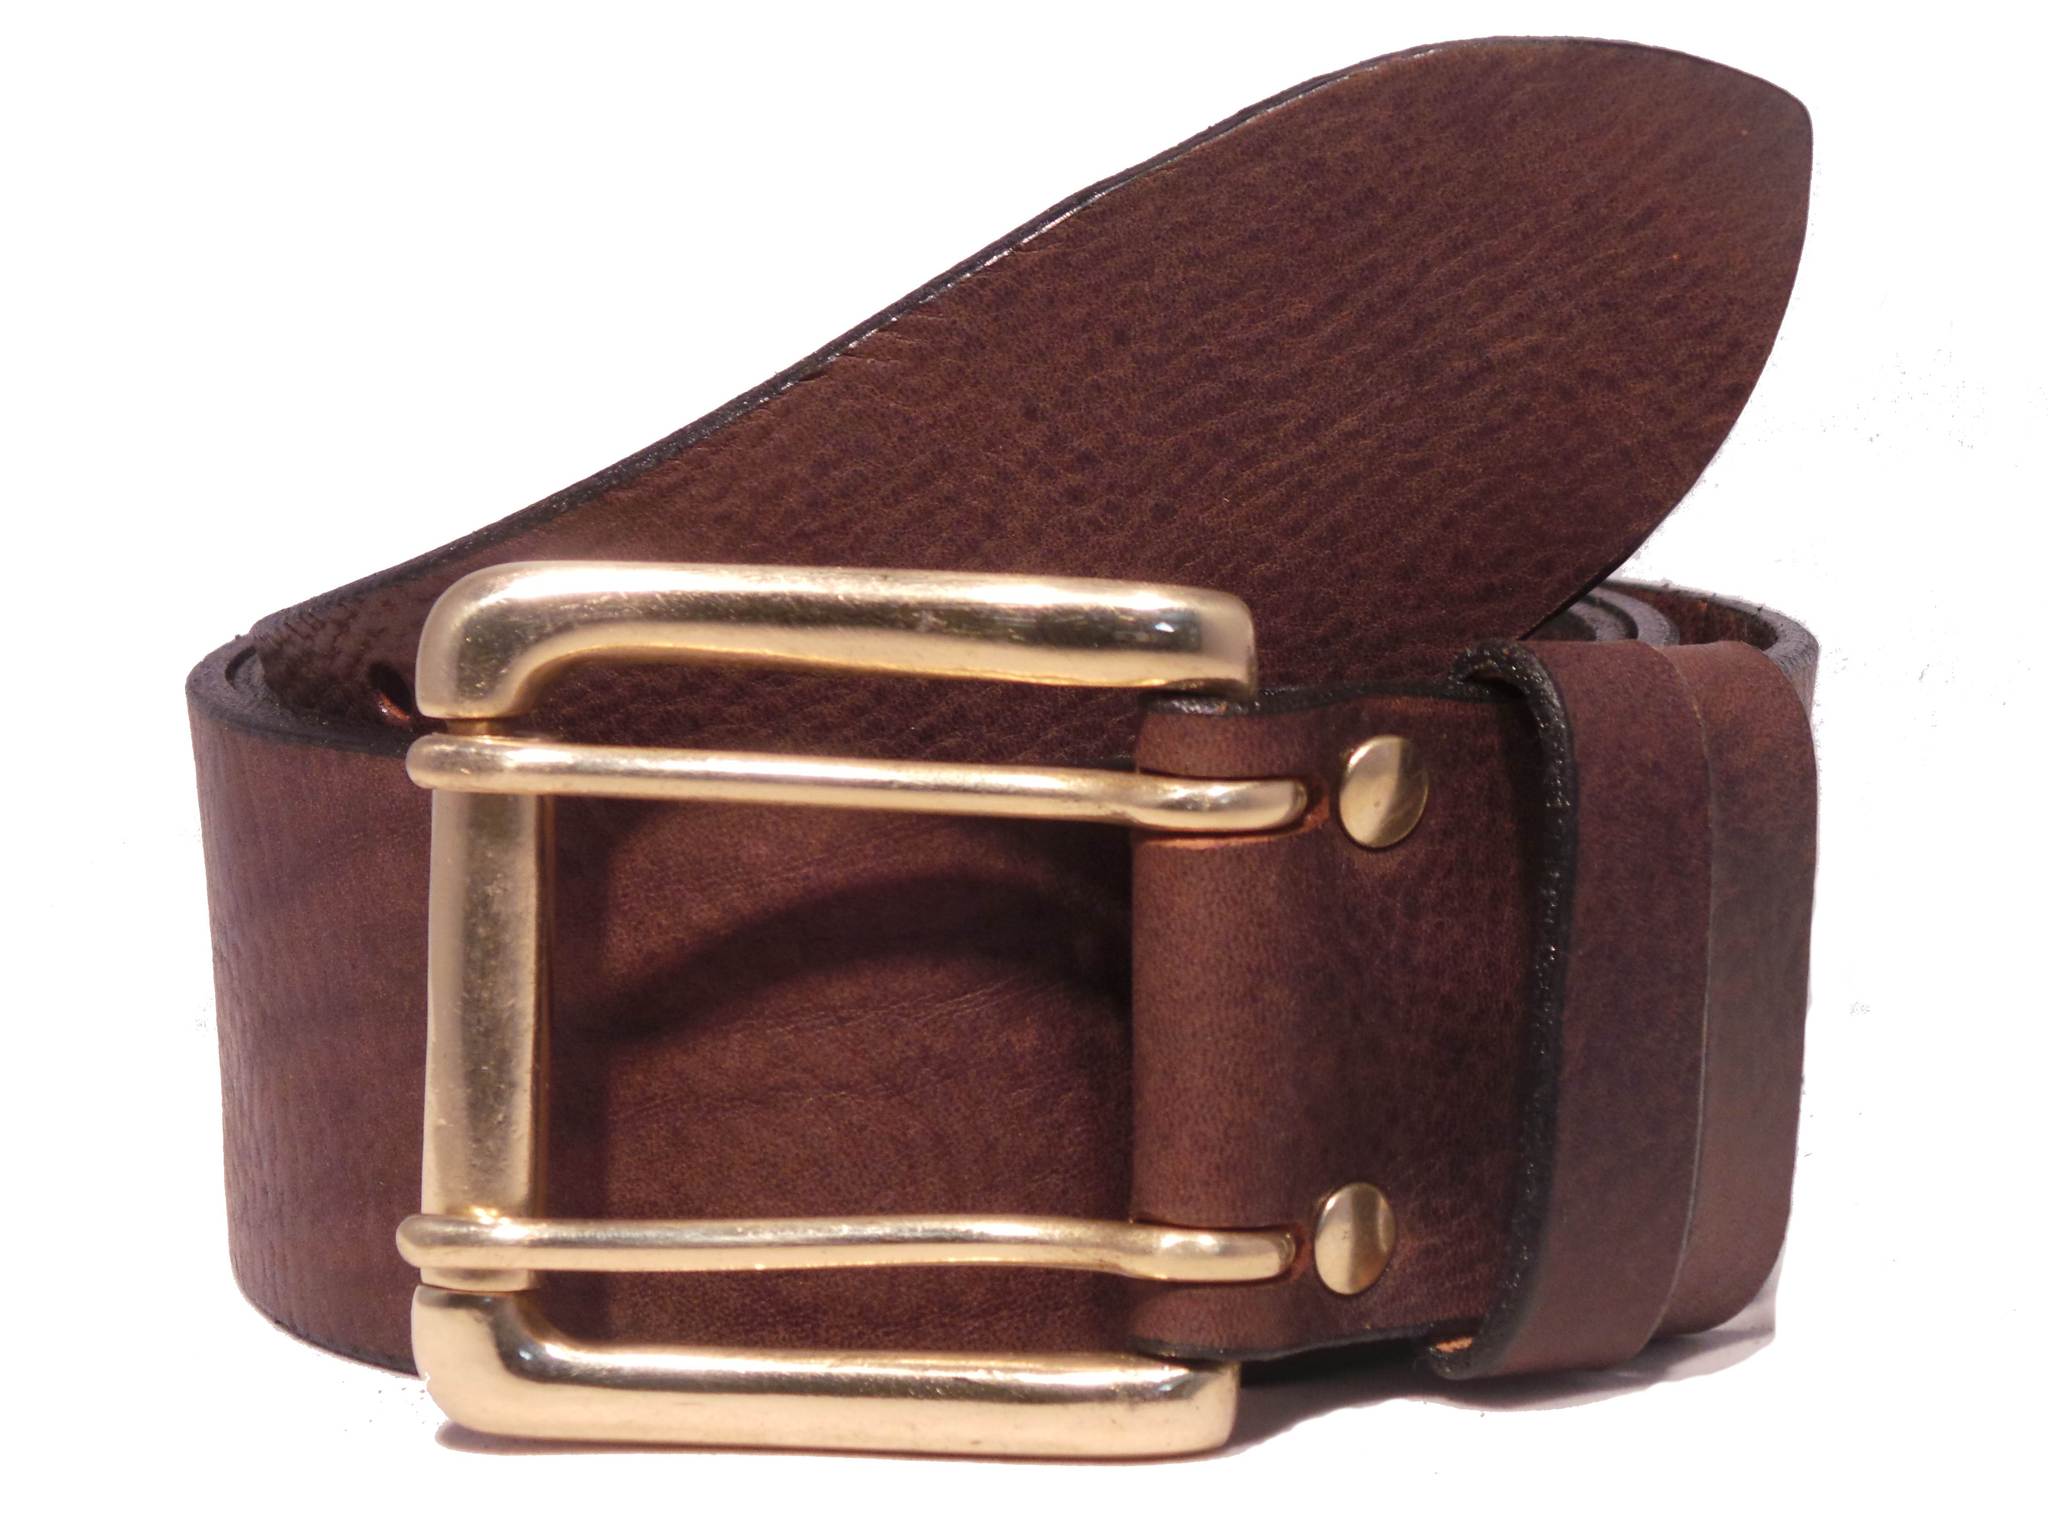 Retro Belt - Real Leather - Brass Buckle - Light Brown - Dark Brown -  ApolloBox